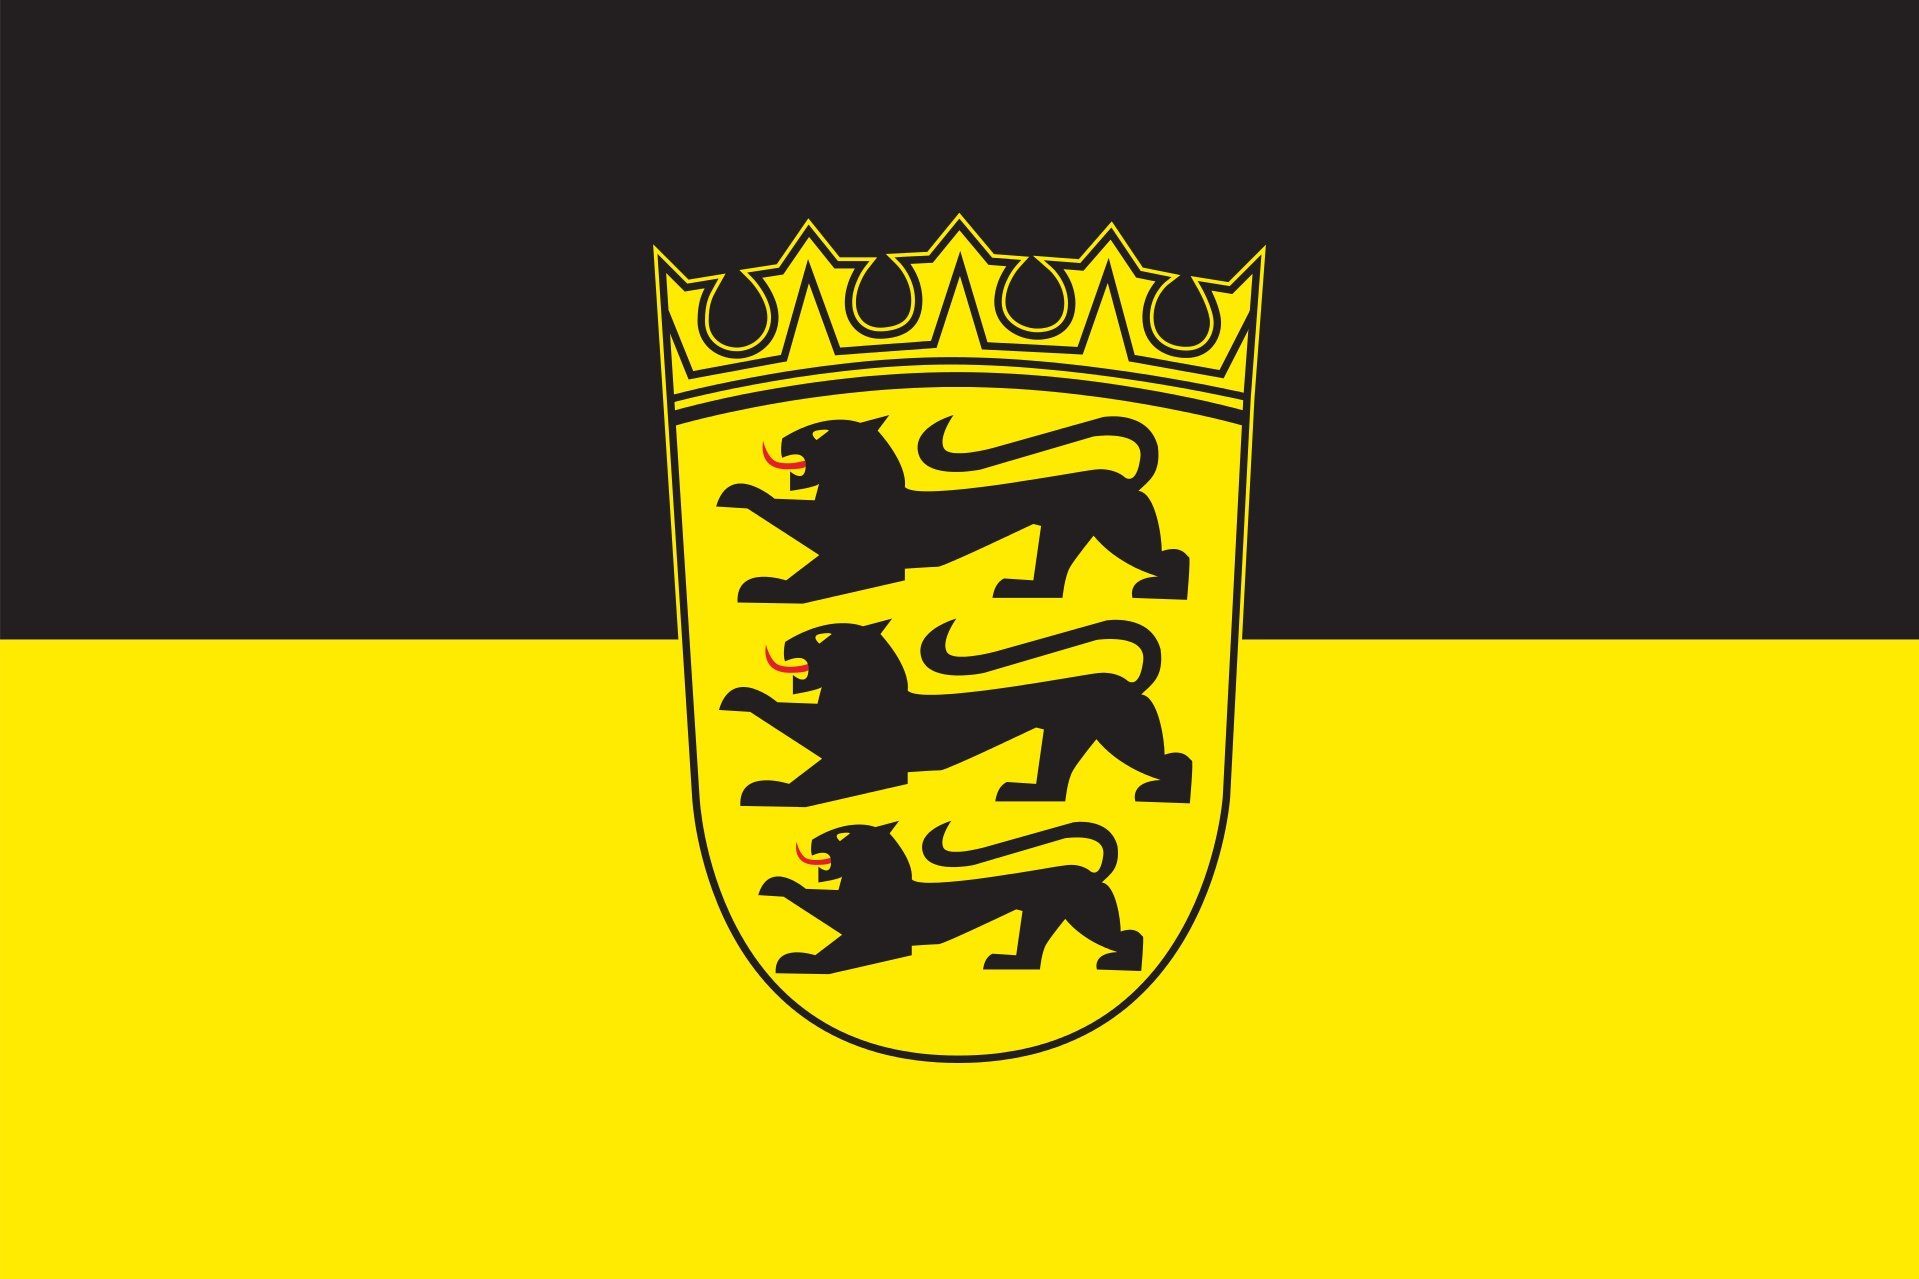 Flagge Wappen 80 flaggenmeer g/m² Baden-Württemberg mit